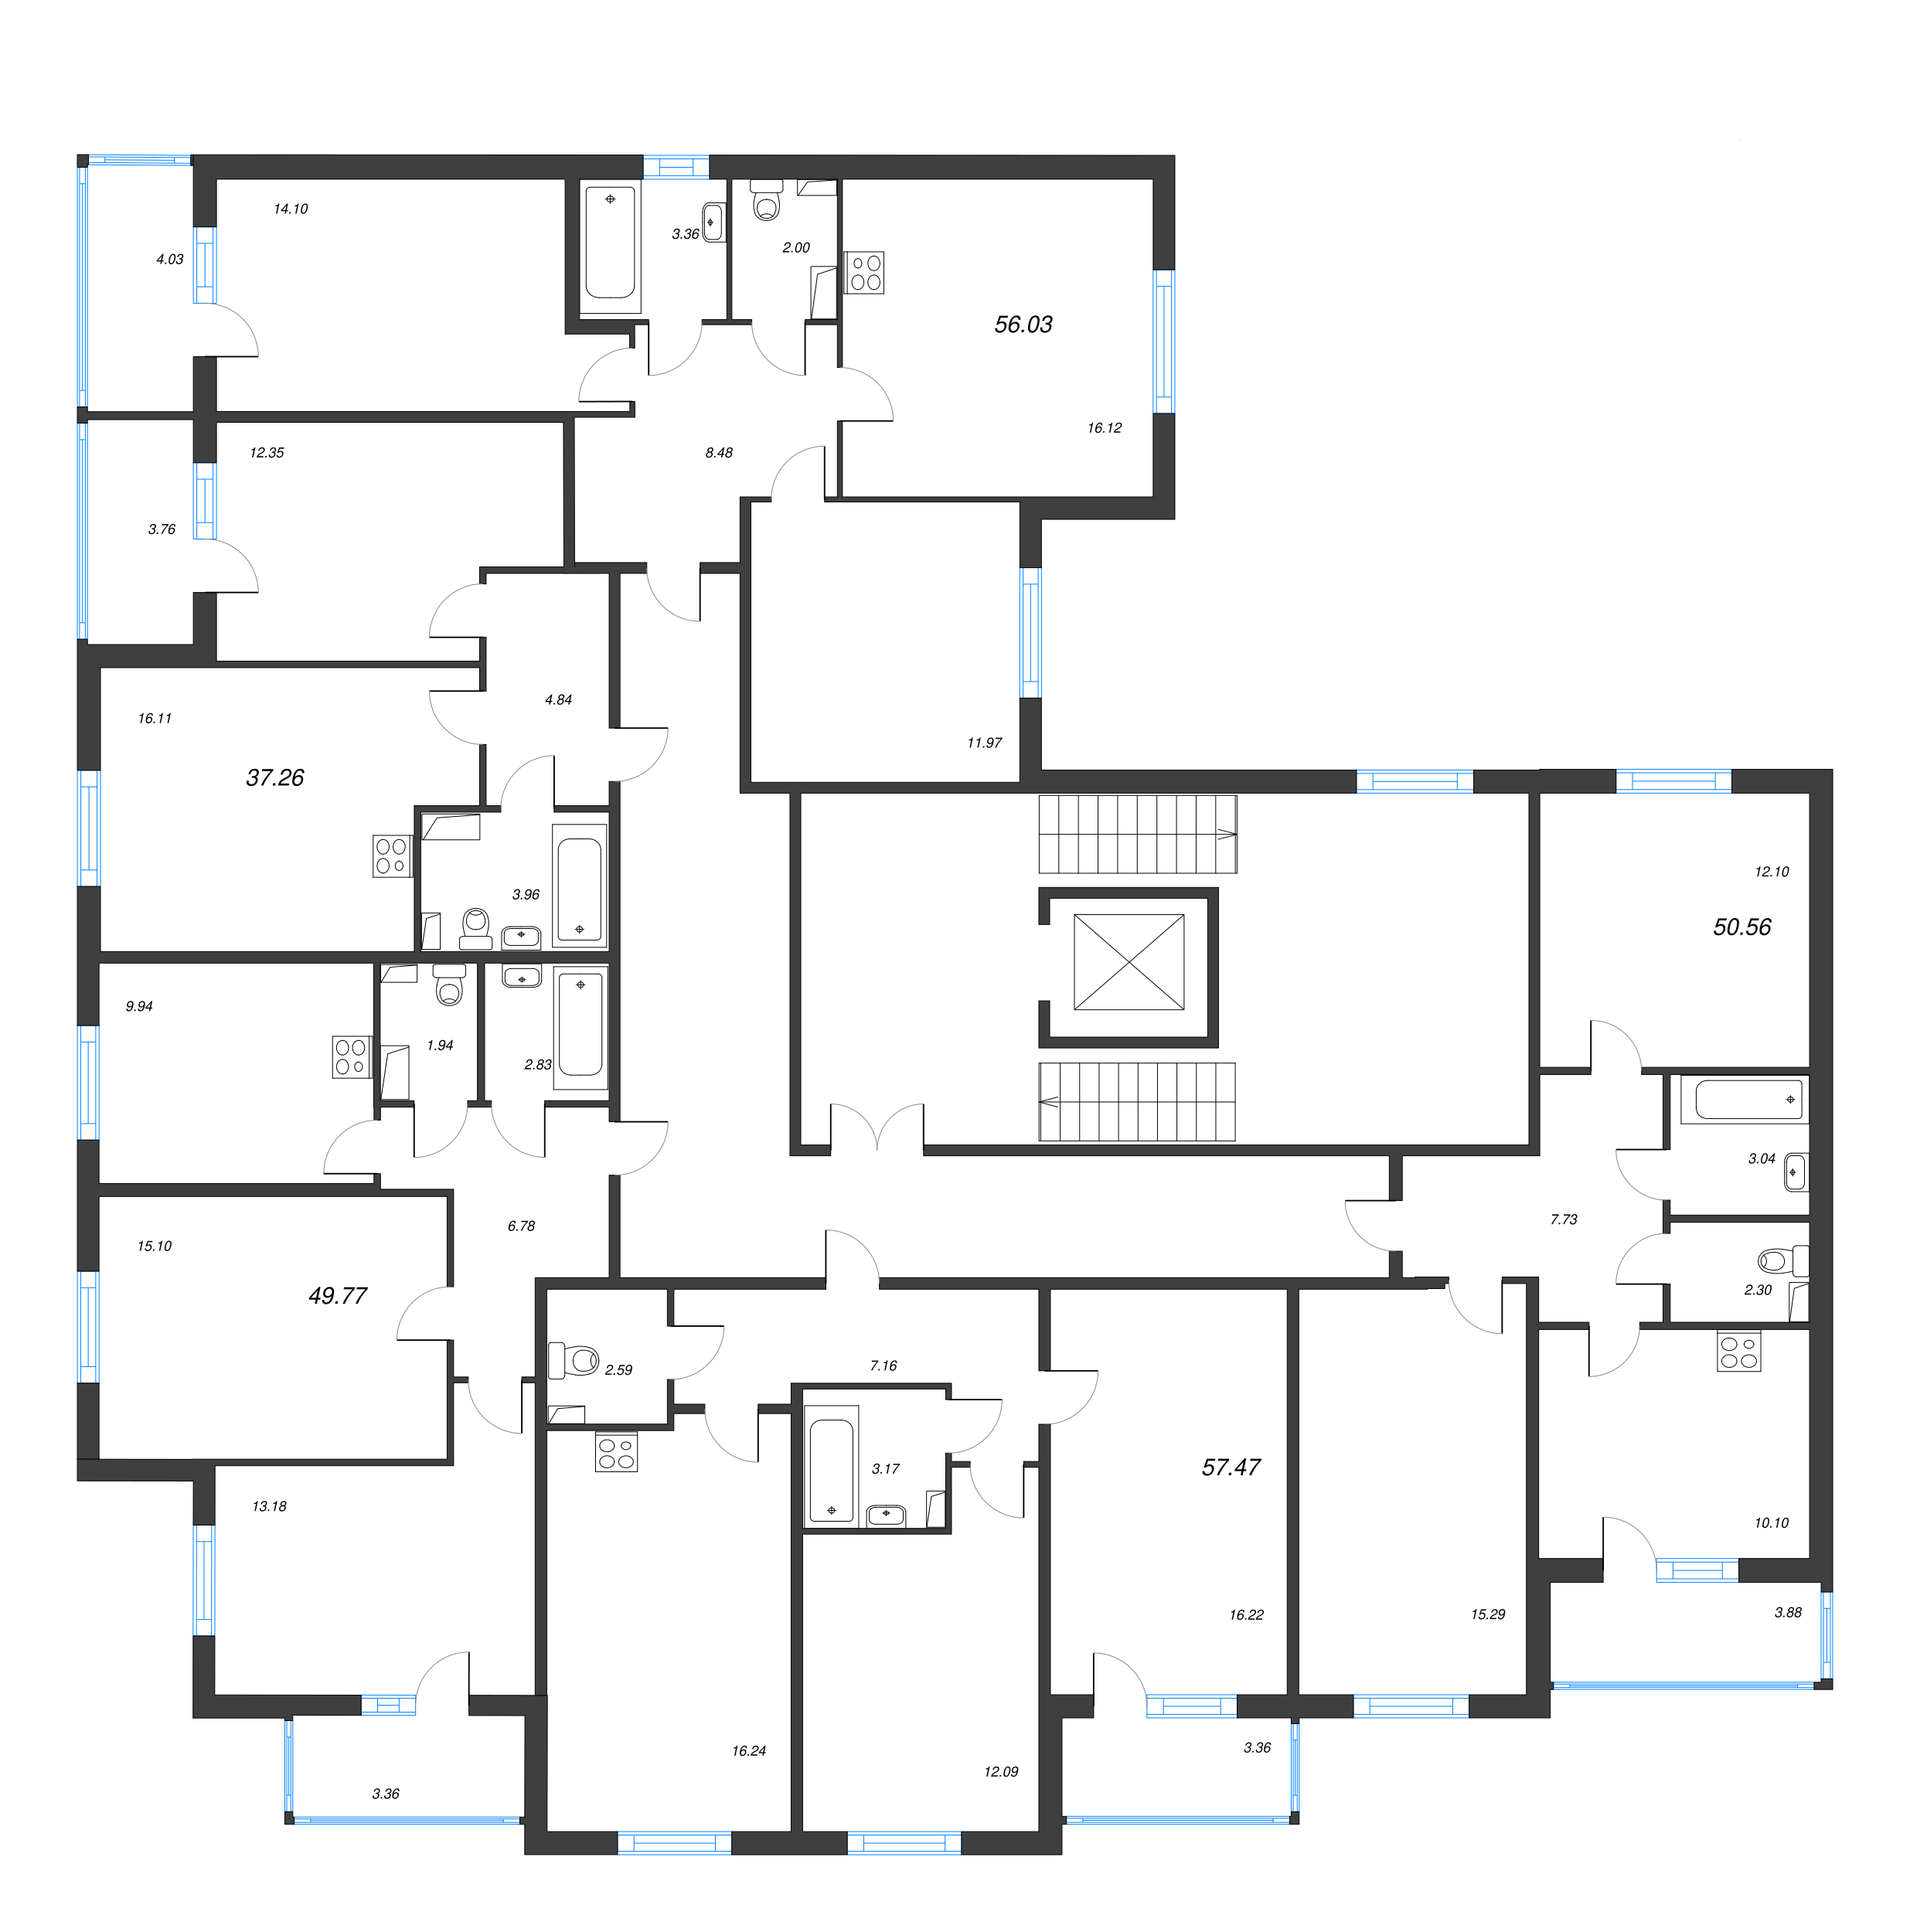 3-комнатная (Евро) квартира, 57.47 м² - планировка этажа